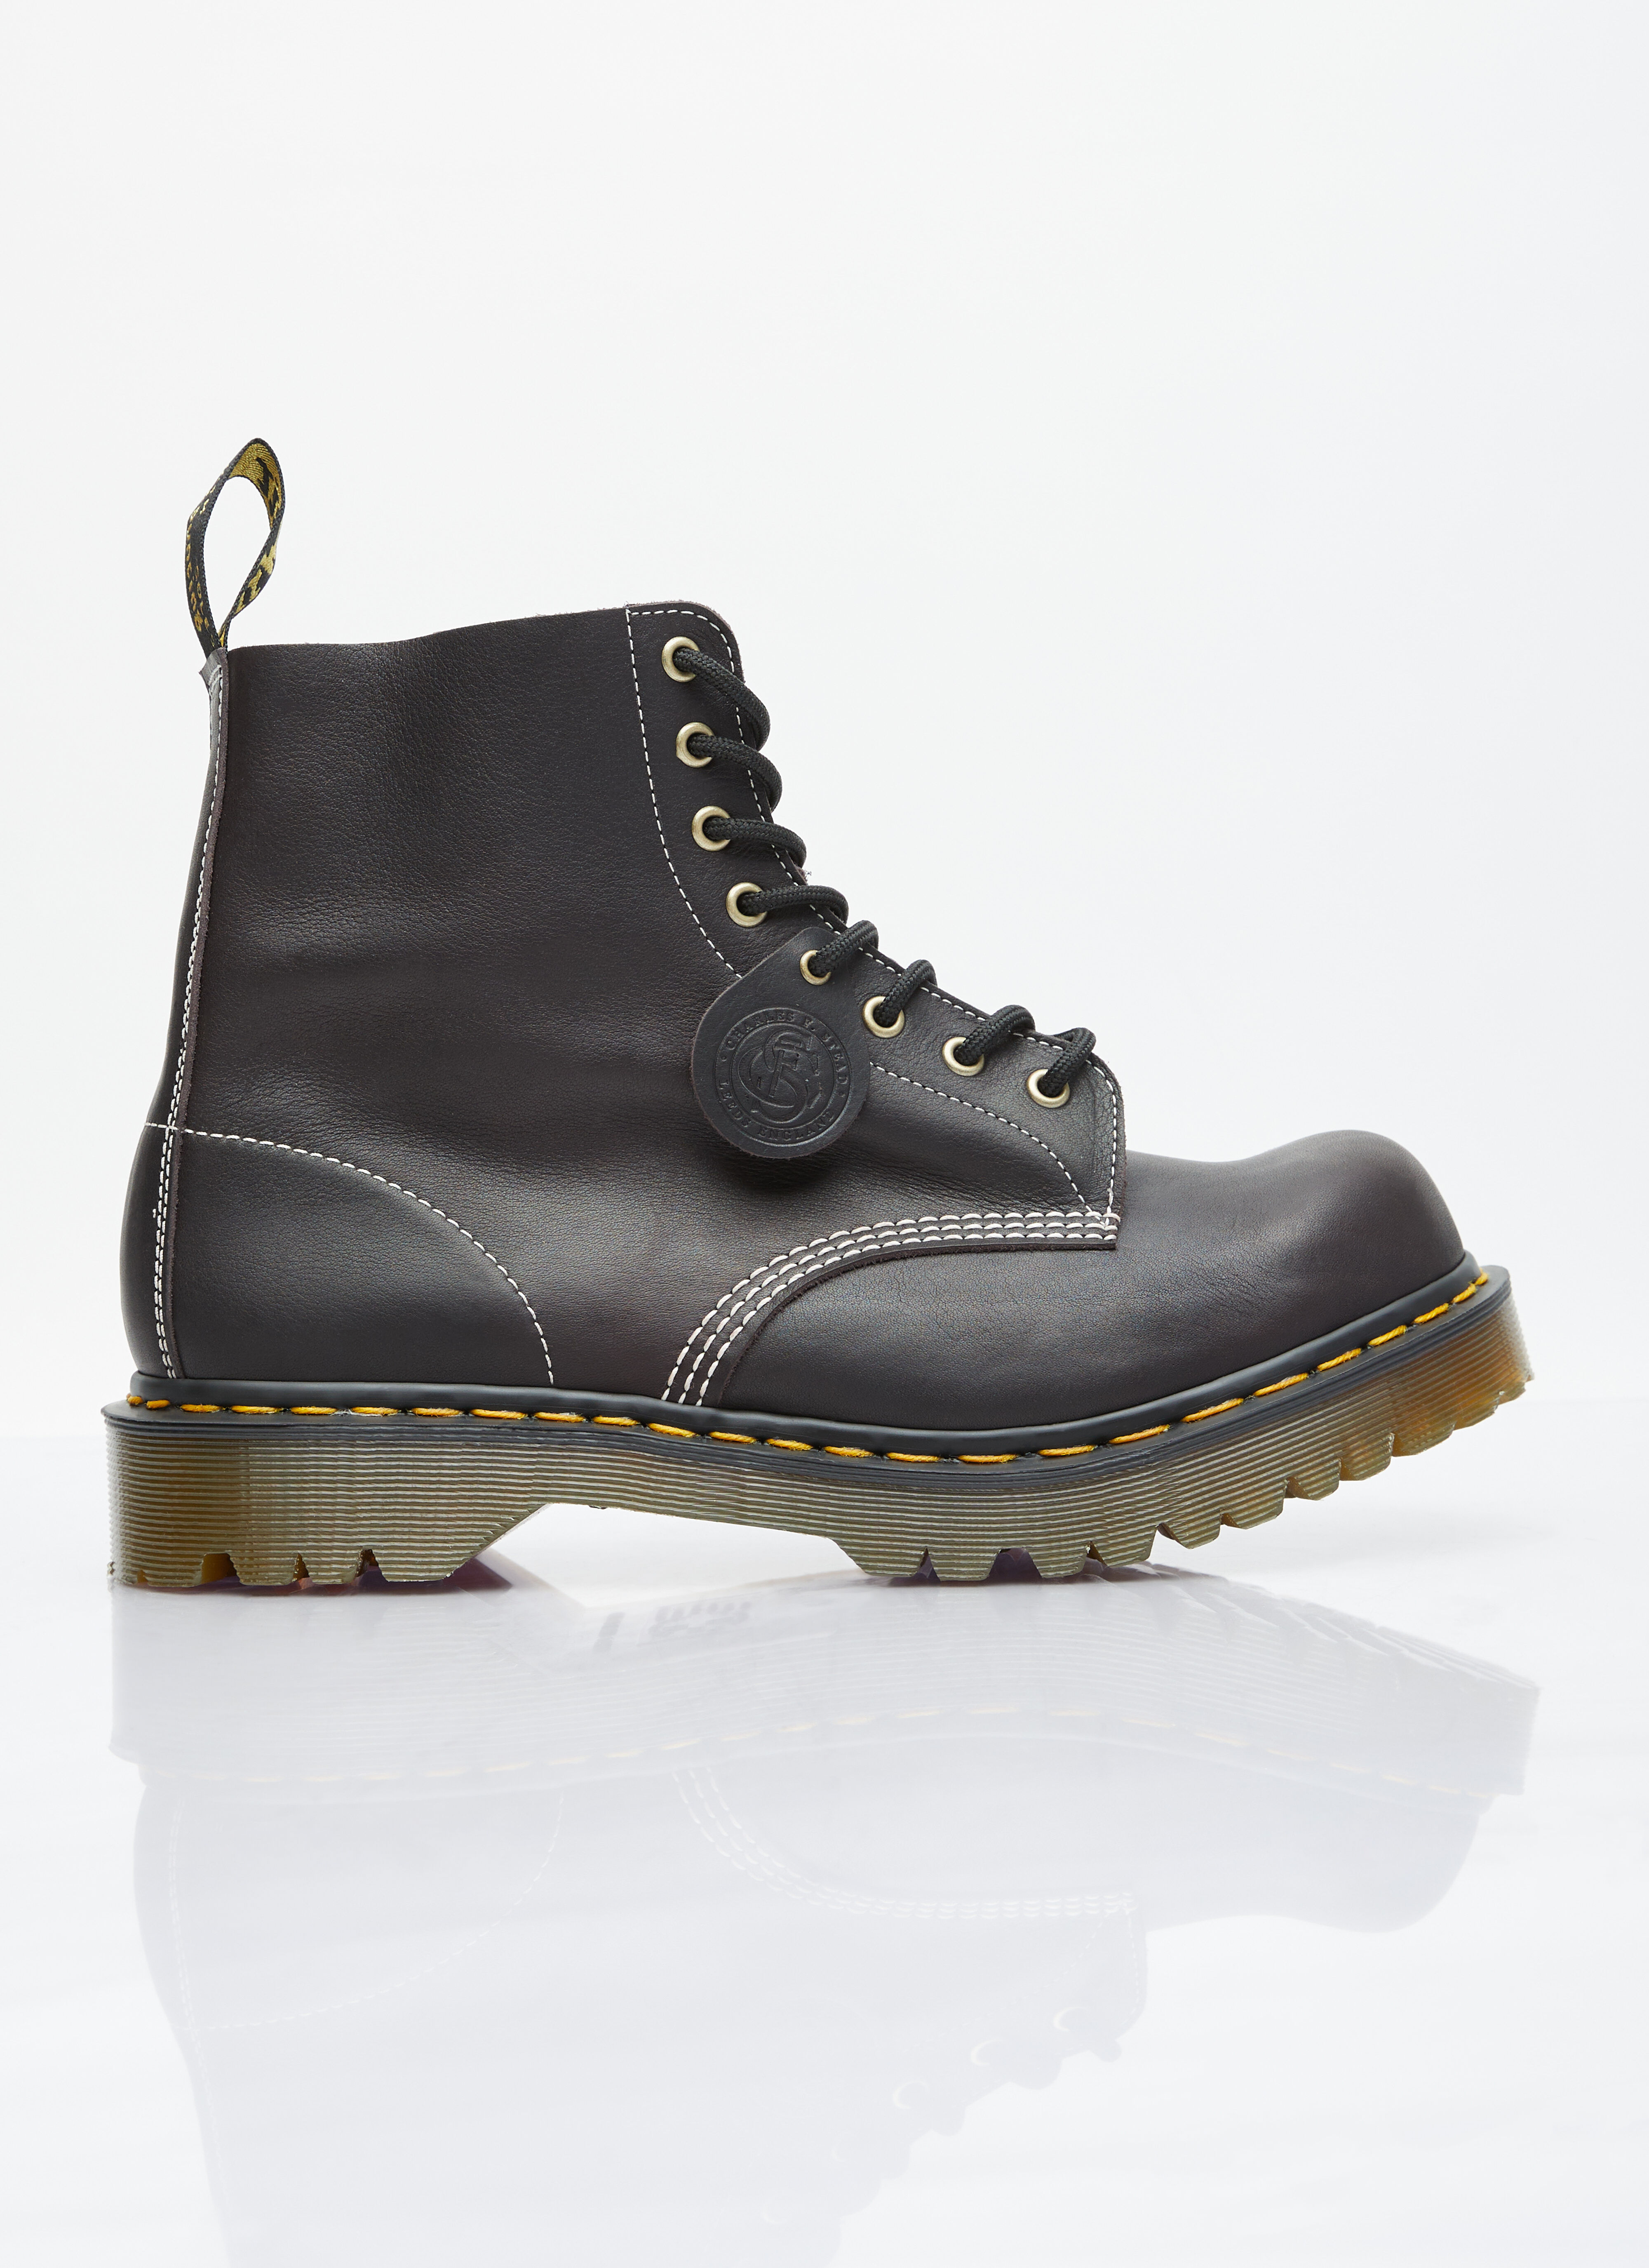 Rick Owens x Dr. Martens 1460 Pascal Leather Boots Black rod0156002